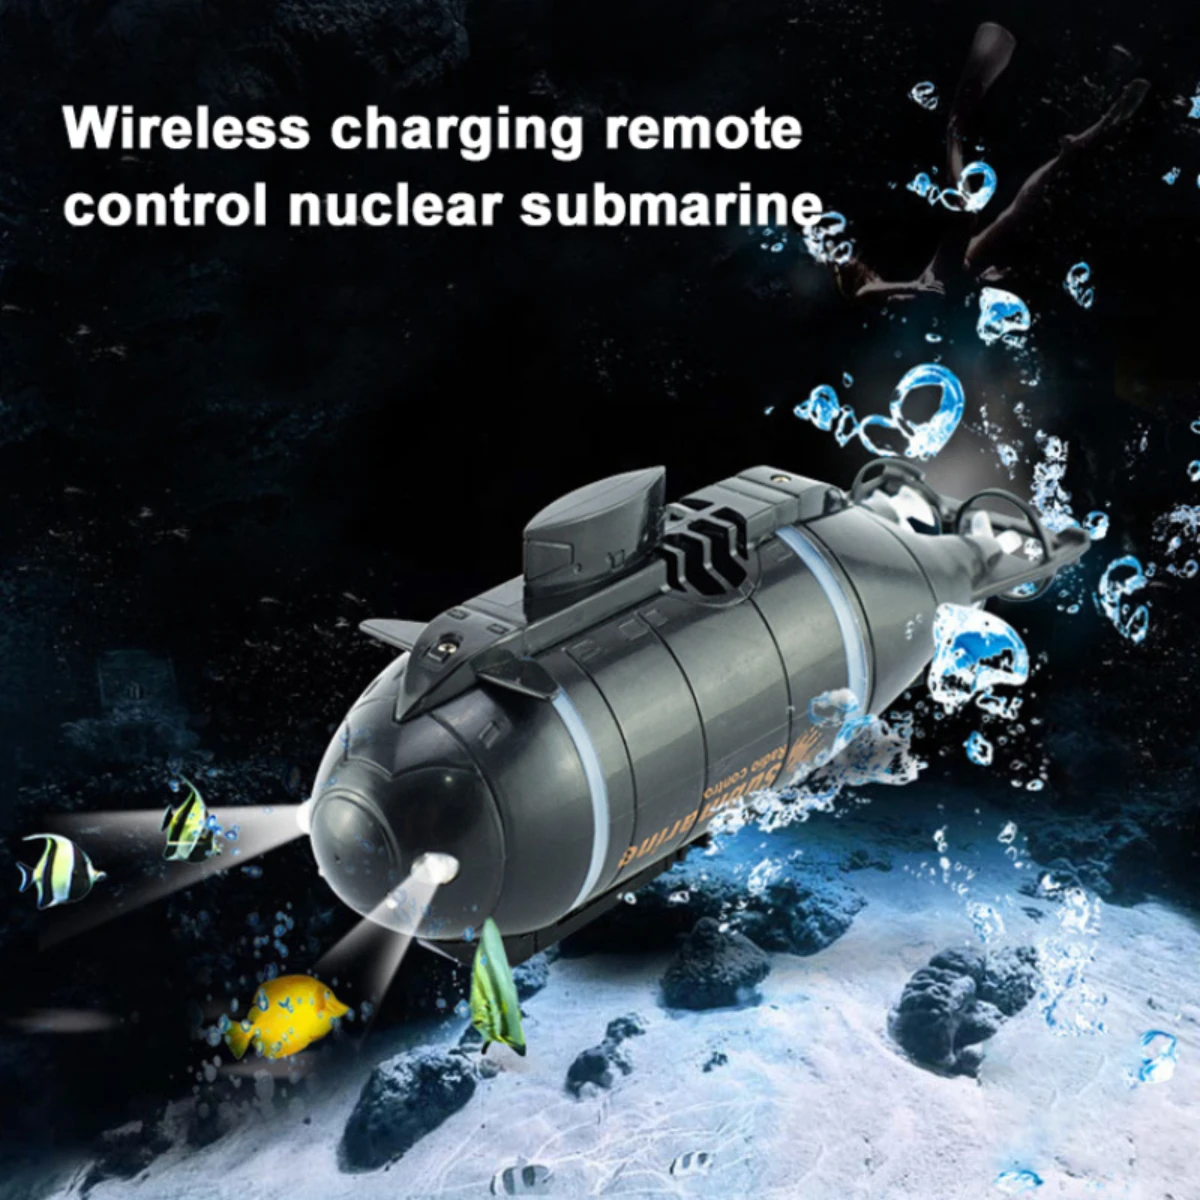 

Mini RC Submarine Nuclear Submarine Charging Remote Control Underwater Bathtub Toy Moving Submarine Model RC Boat Toy